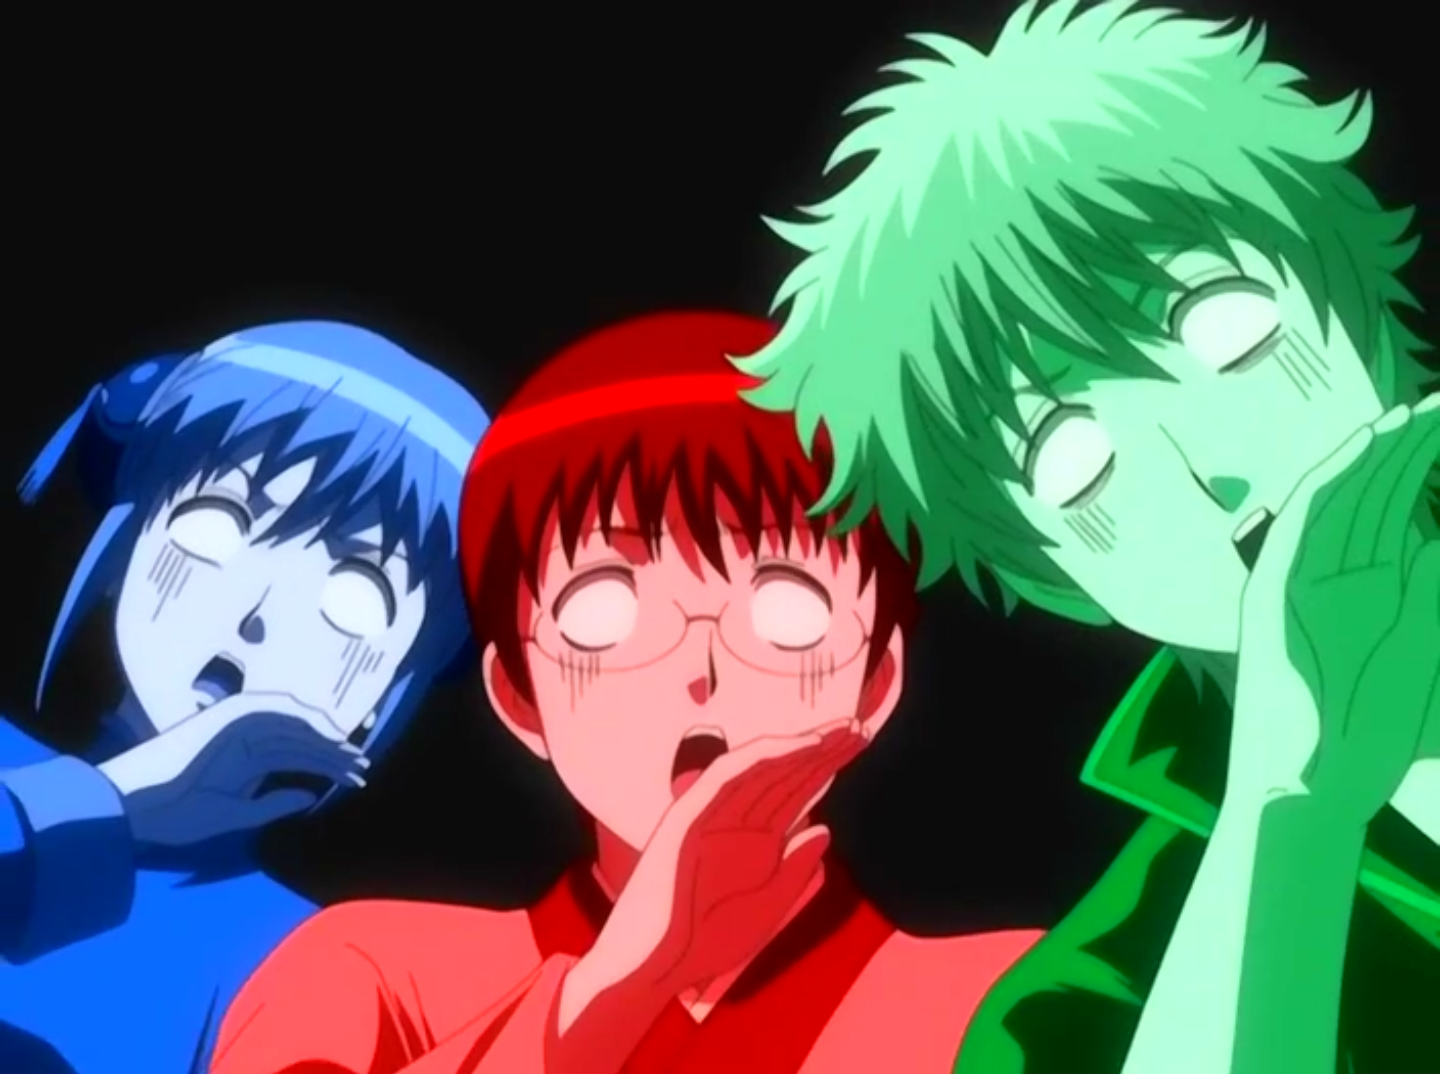 Shock face . (o3o)  Anime shocked face, Shocked face, Anime guys